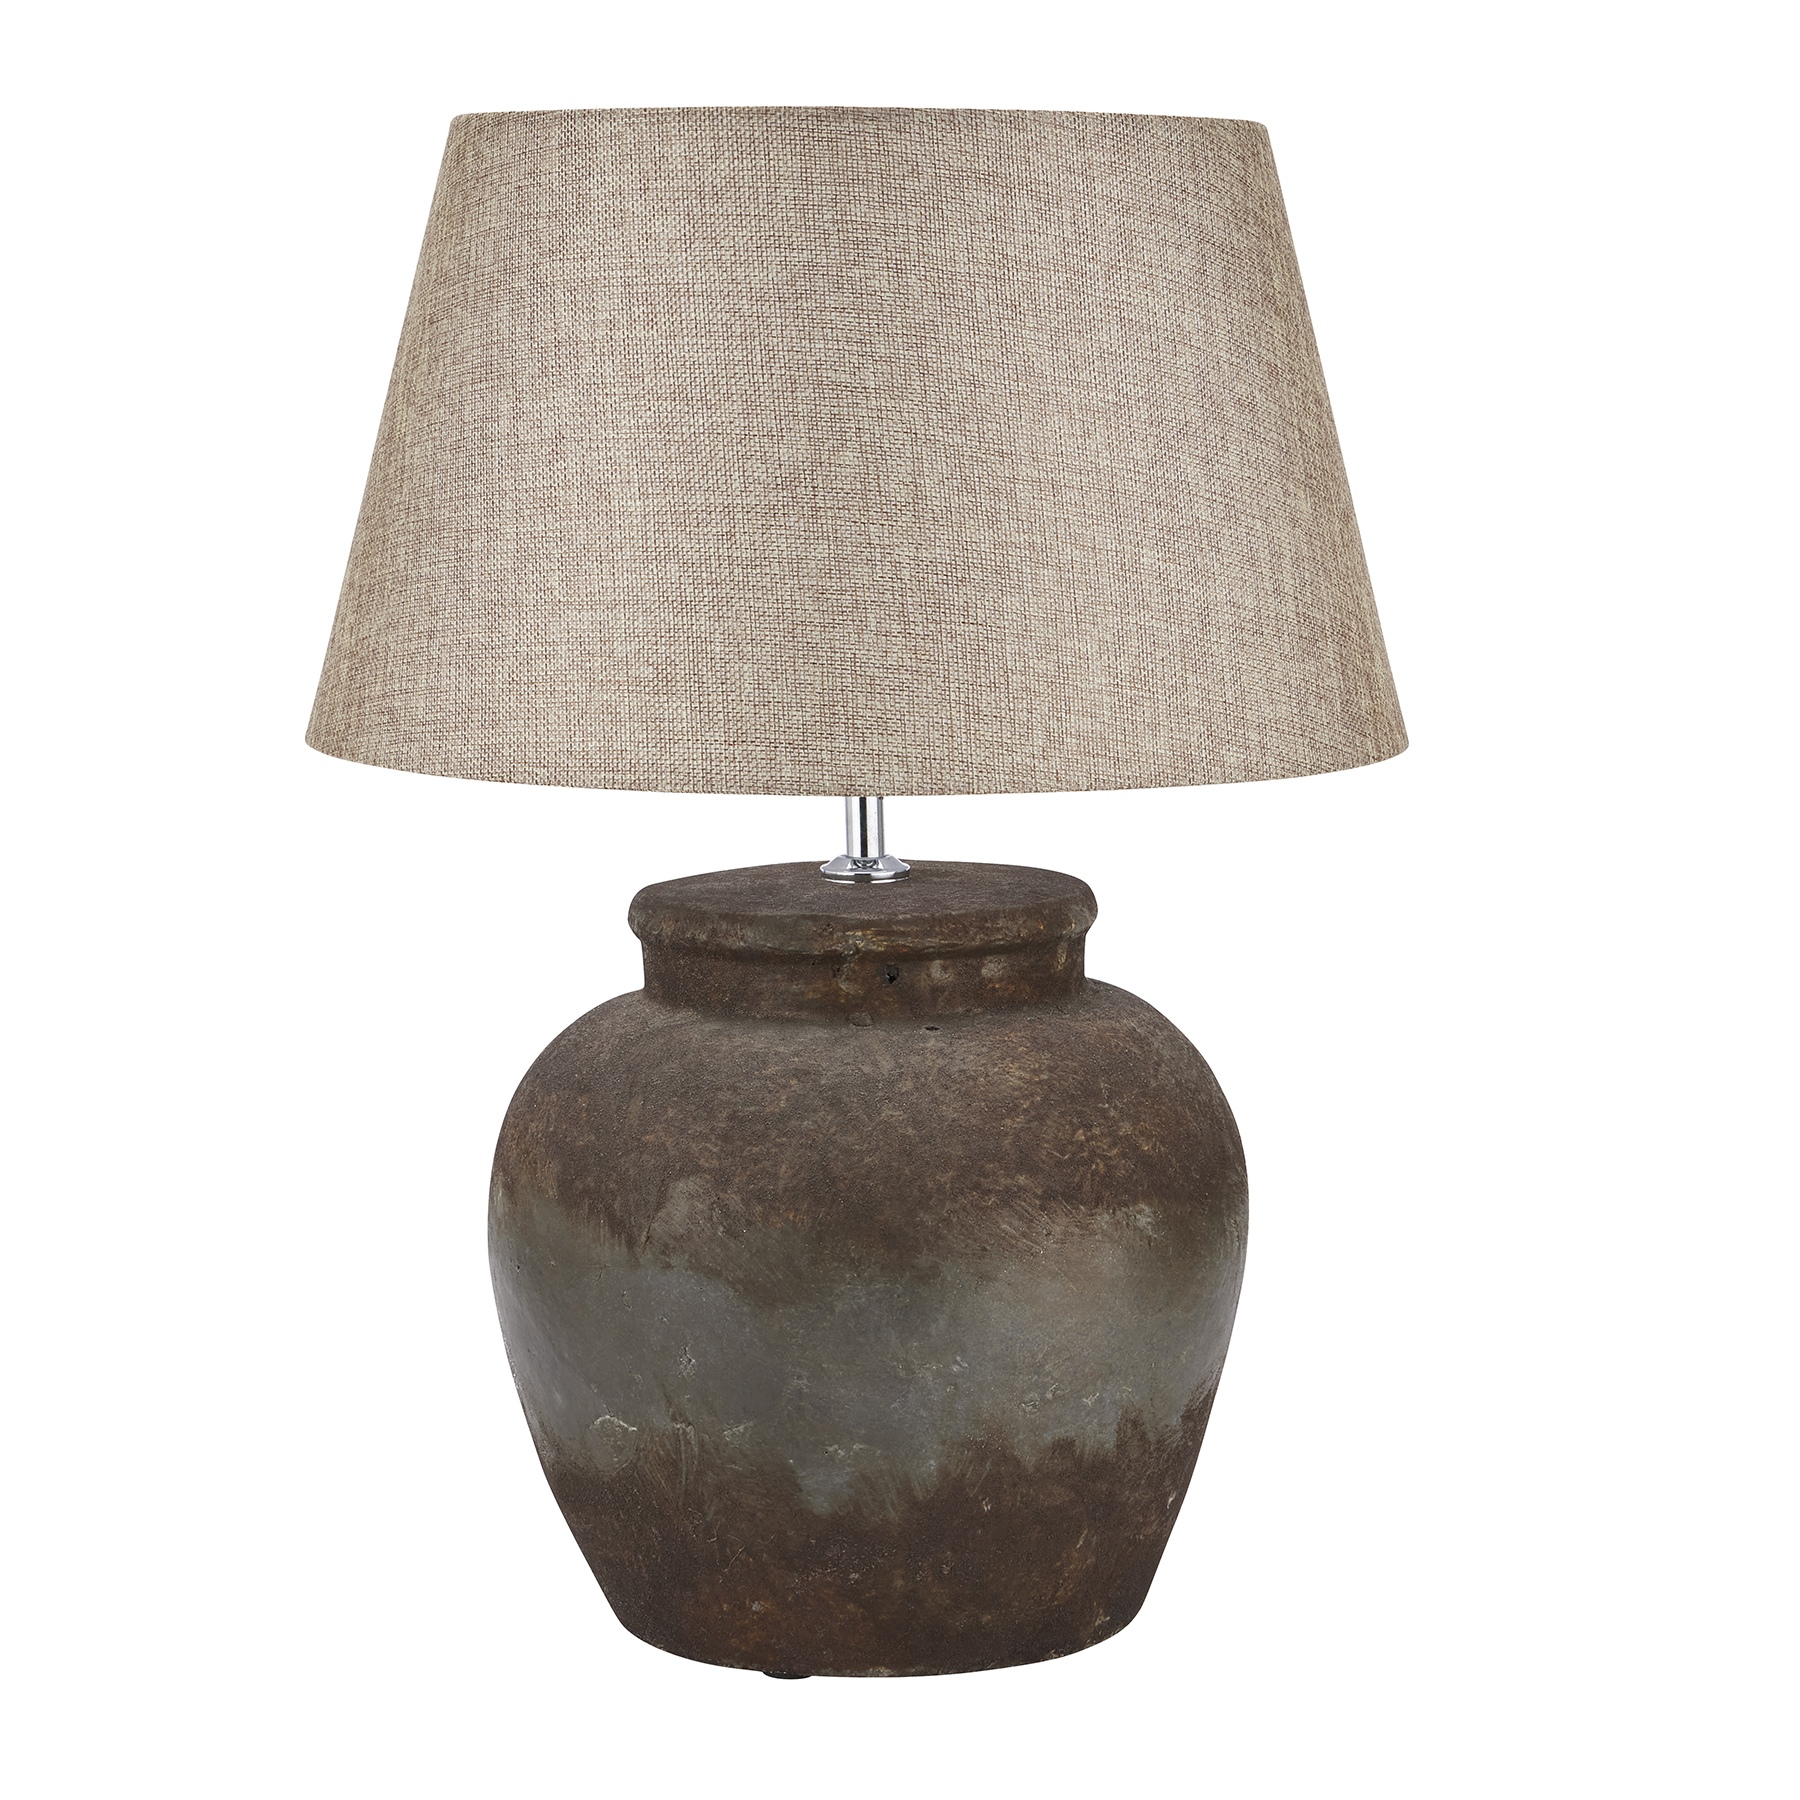 Castello Aged Stone Ceramic Table Lamp - Image 1